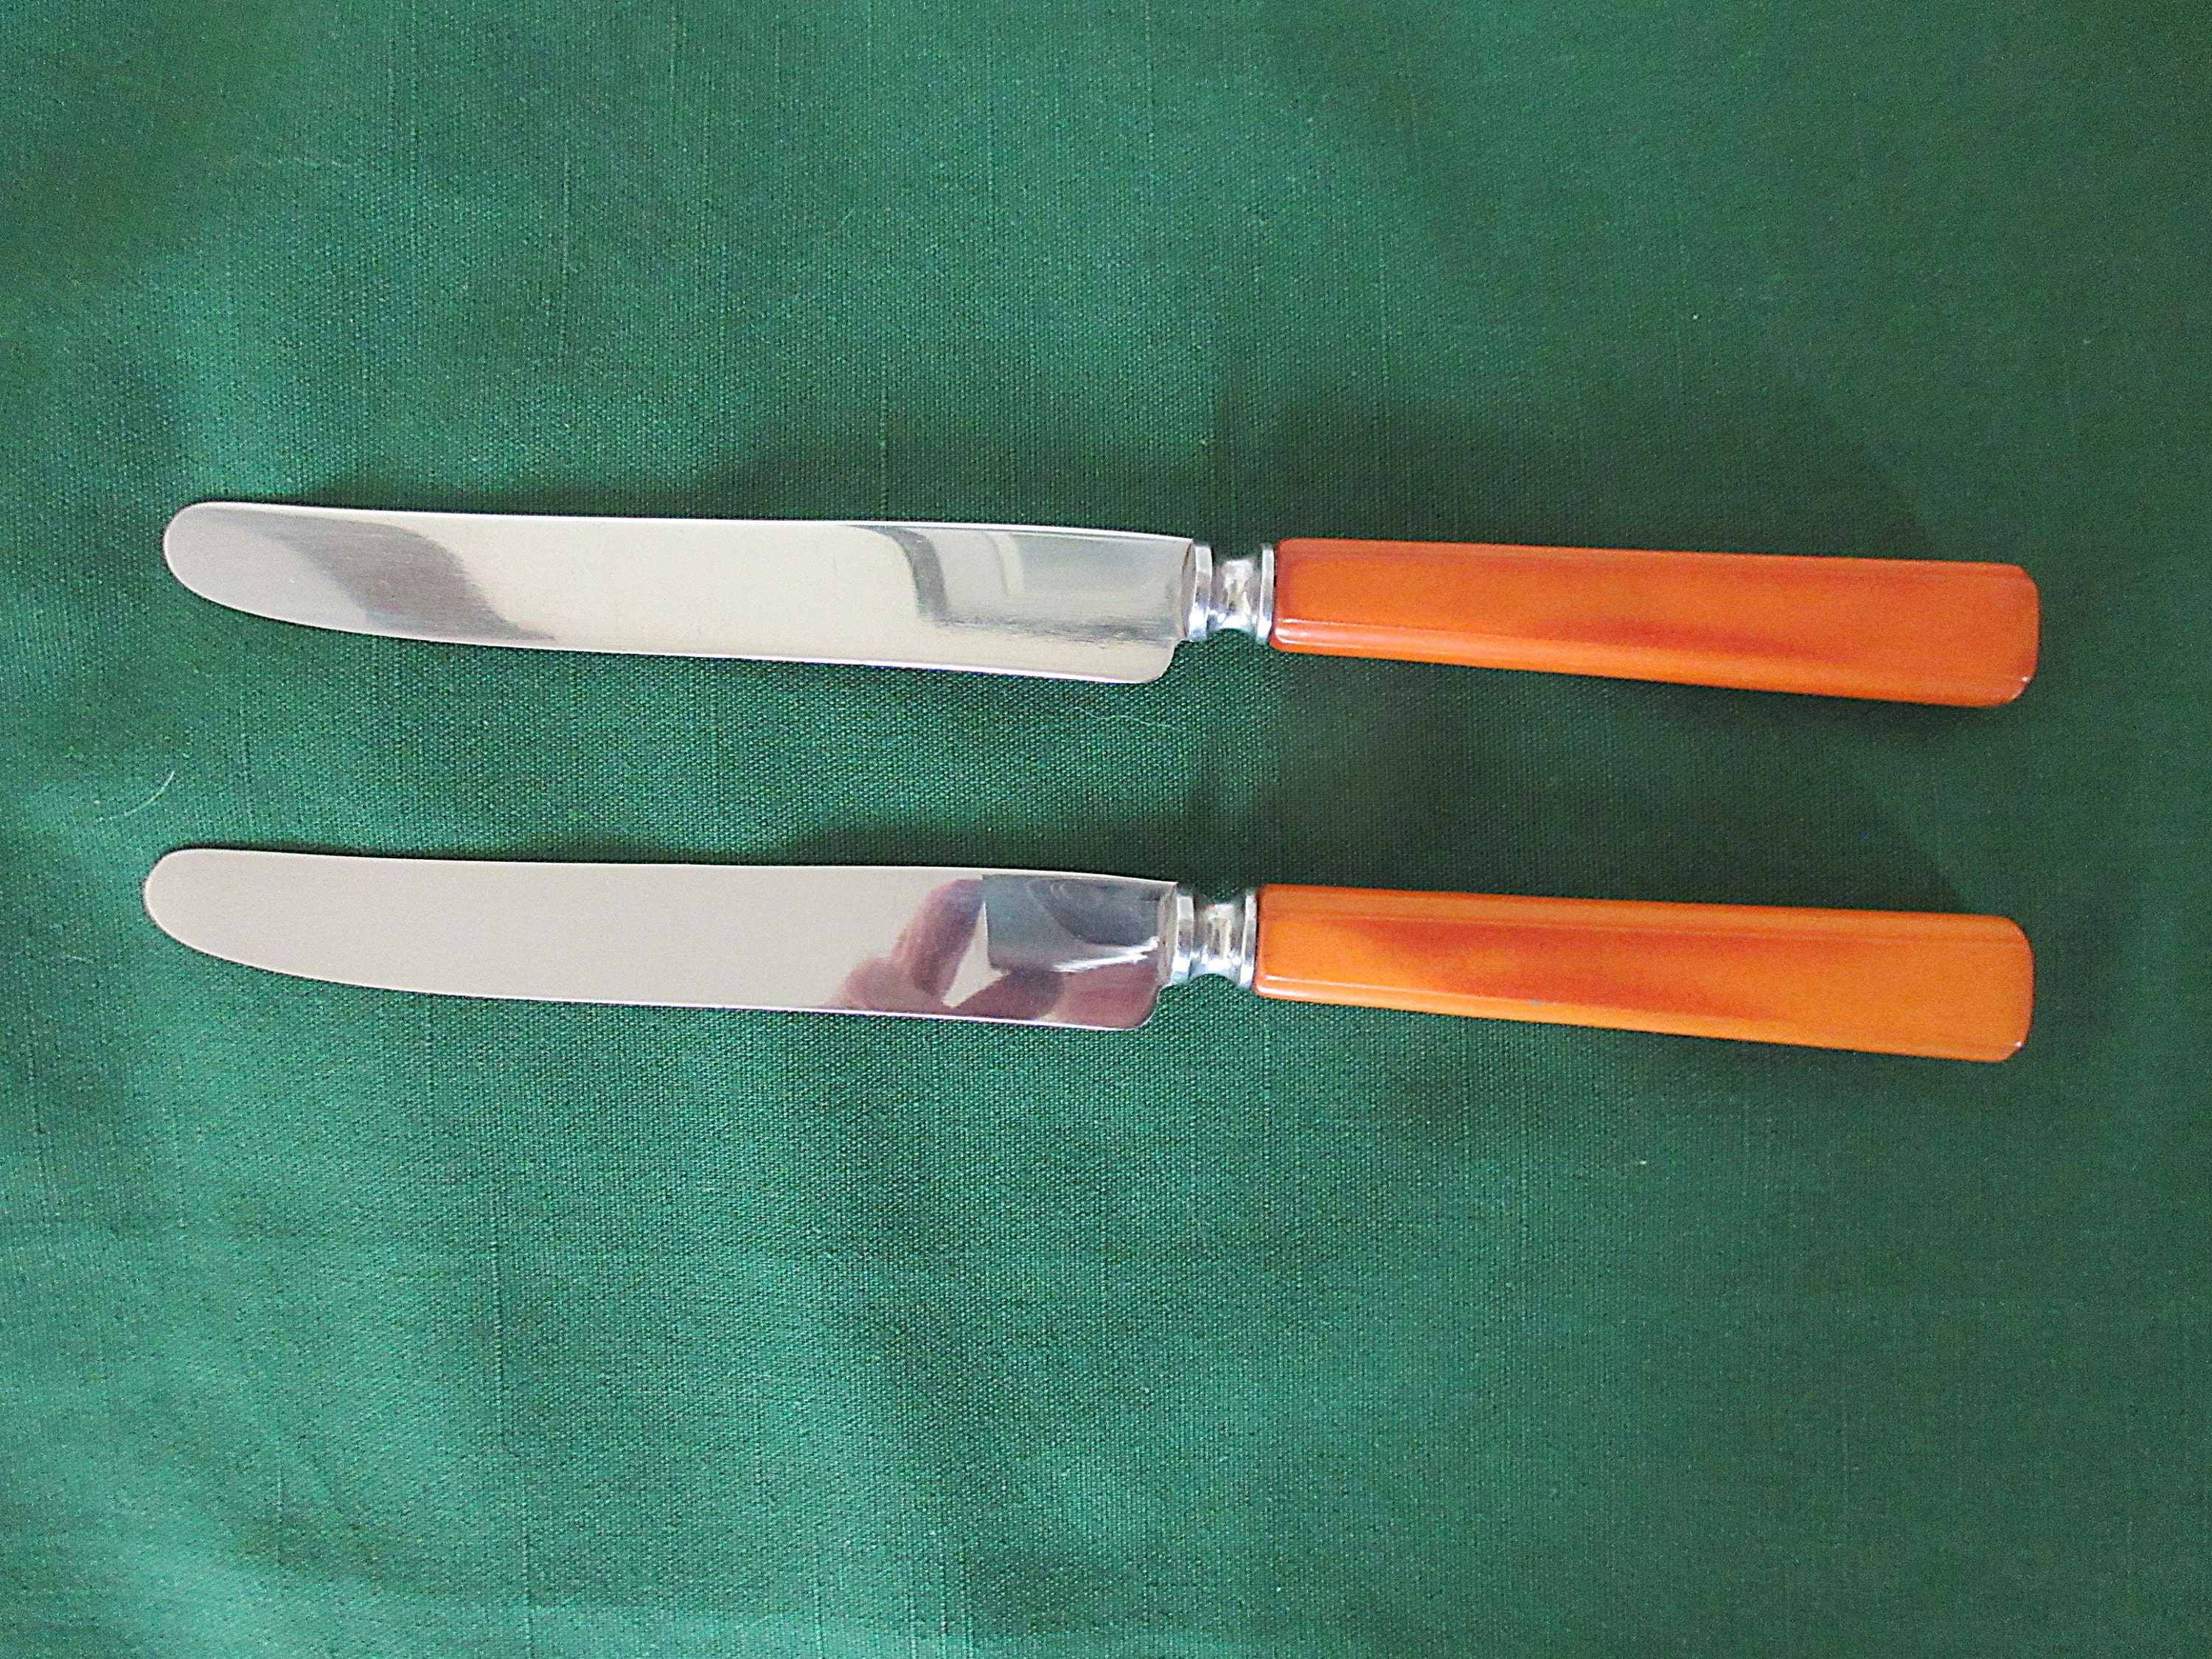 Acrylic Knife Handle Material the Royal 